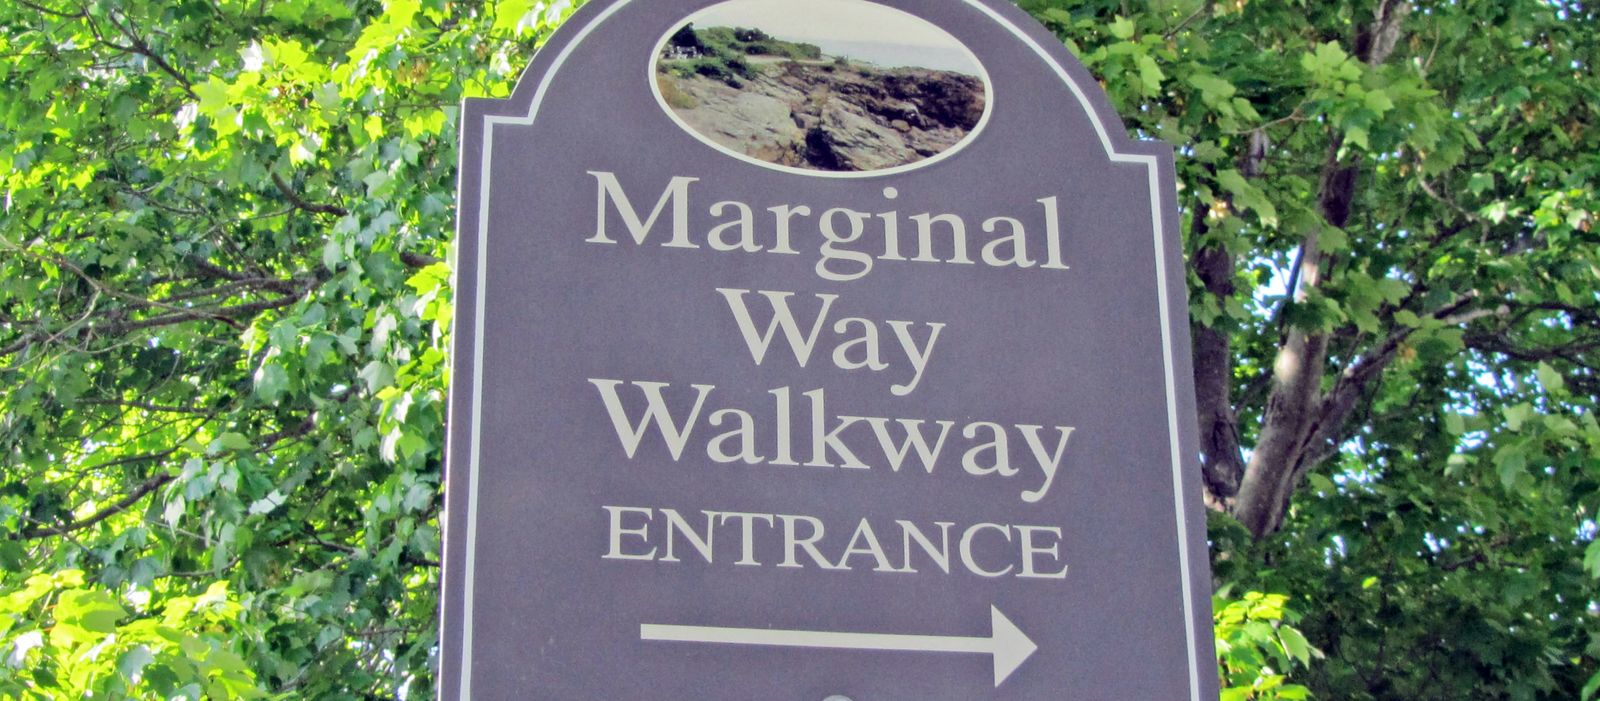 Marginal Way